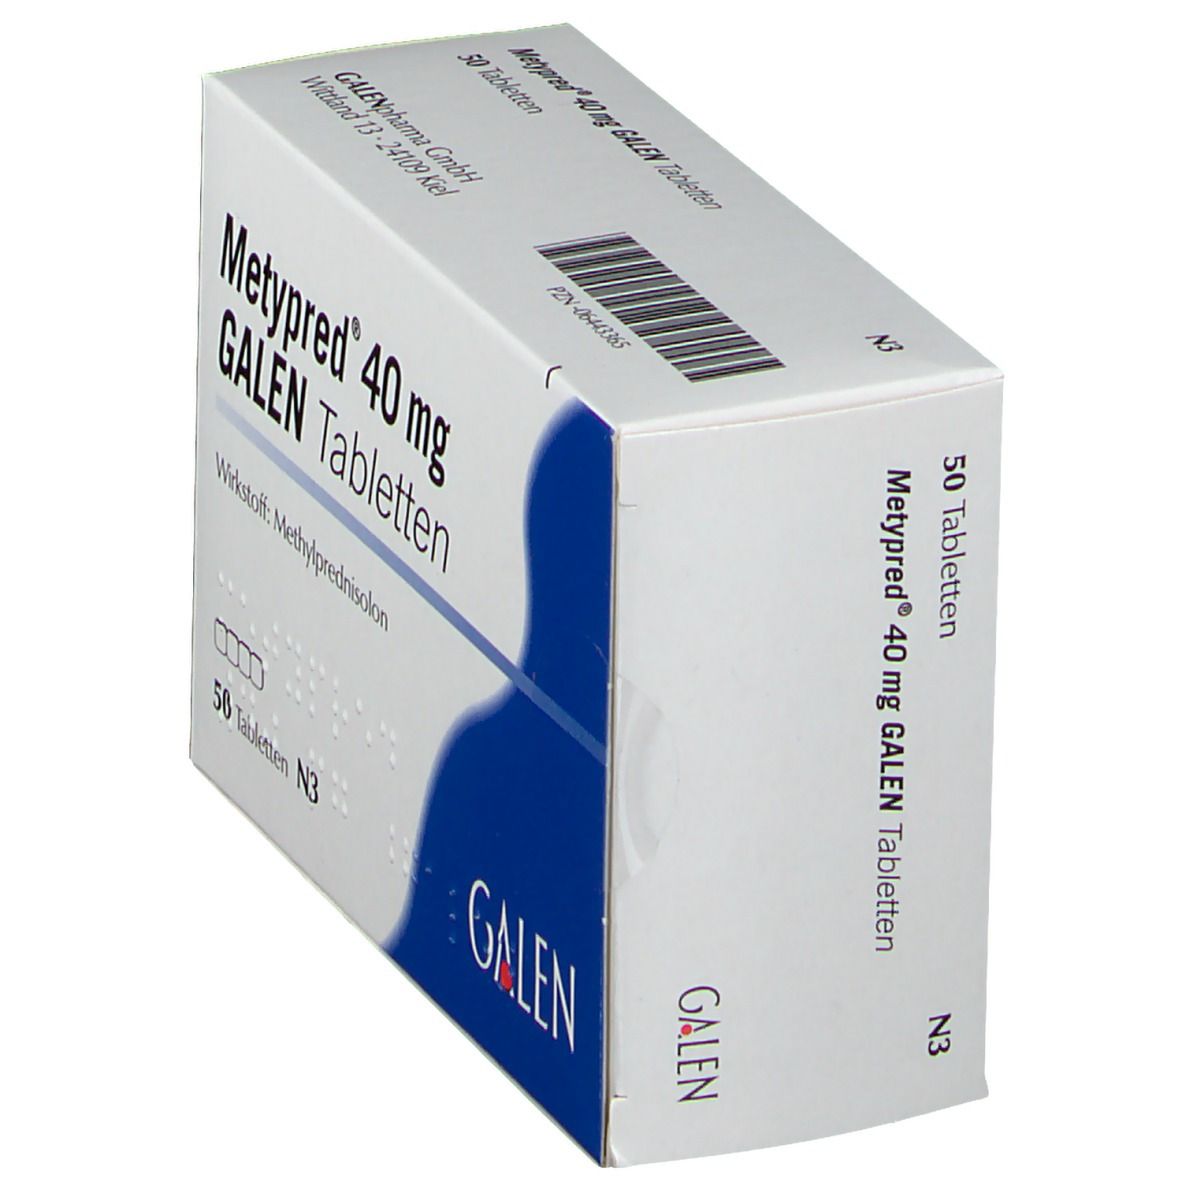 Metypred® 40 mg GALEN